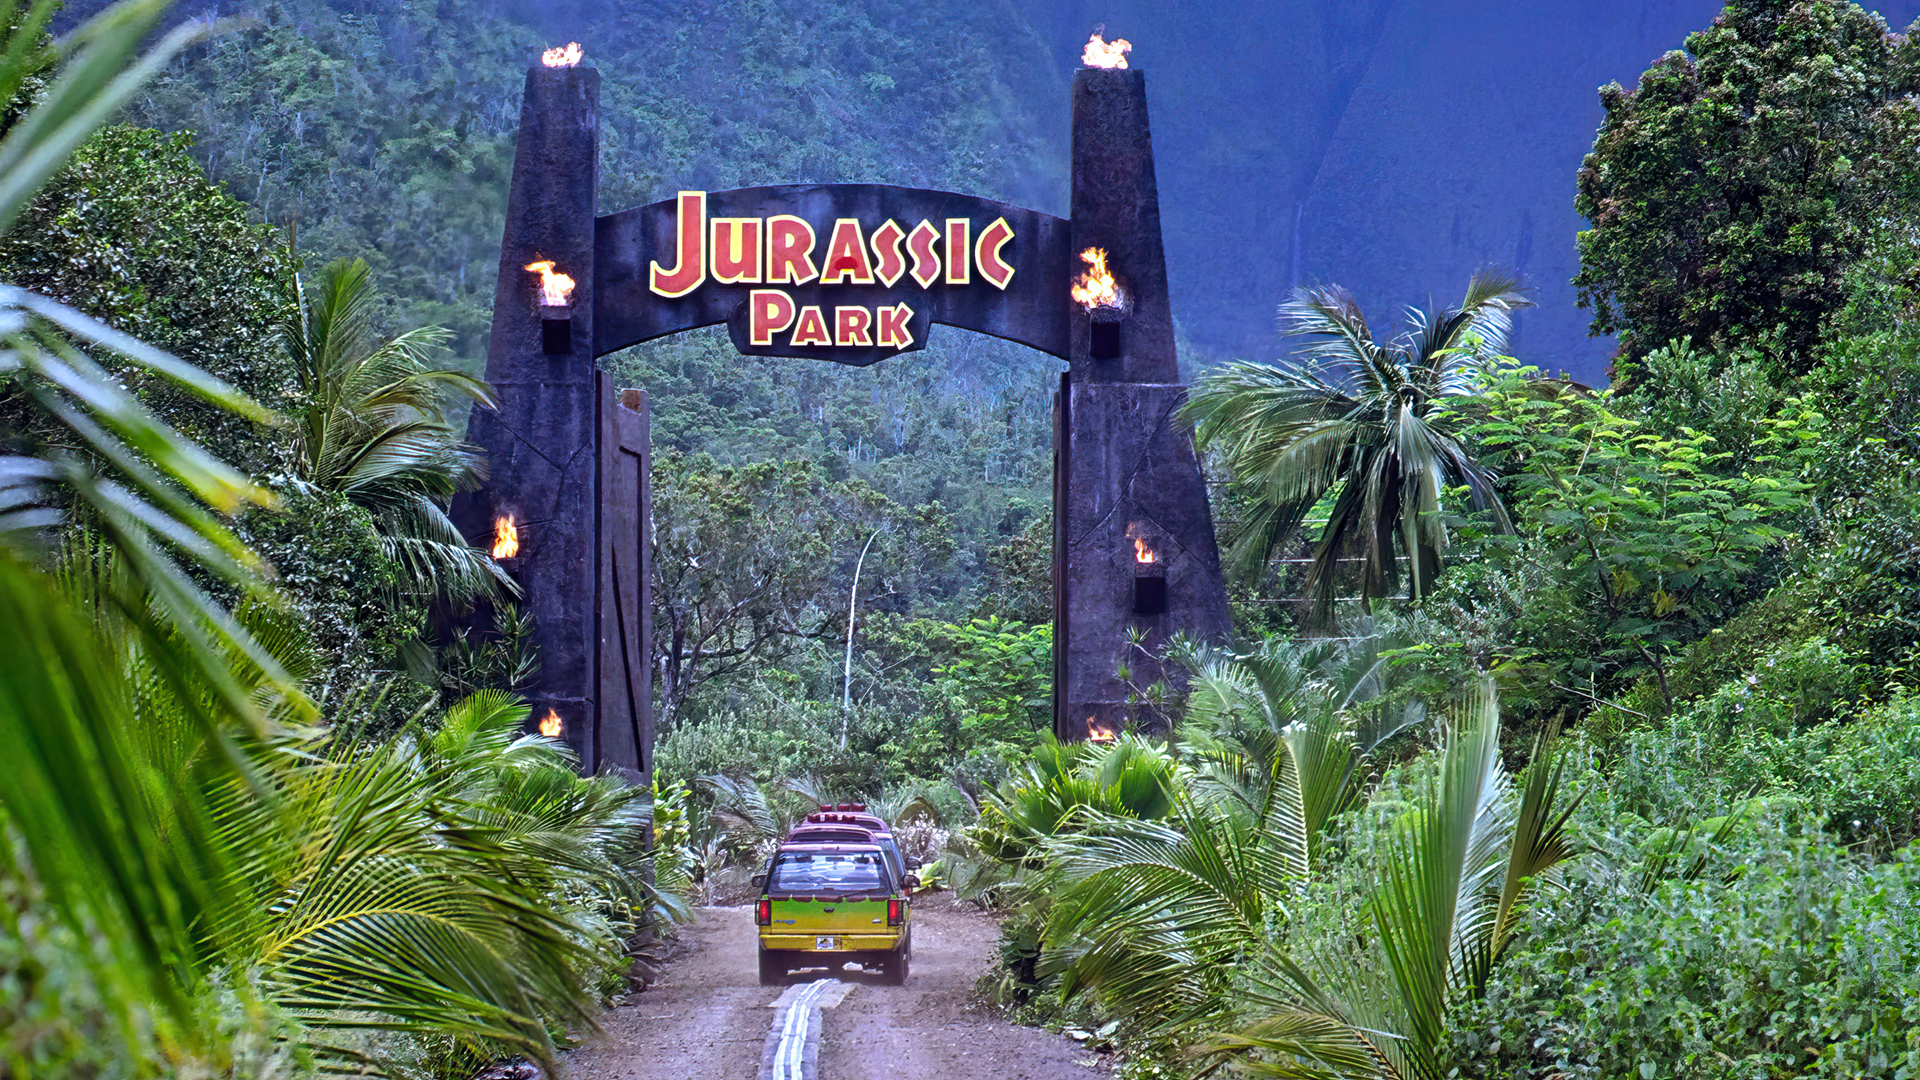 General 1920x1080 Jurassic Park jungle movies film stills car sign logo plants palm trees gates torches